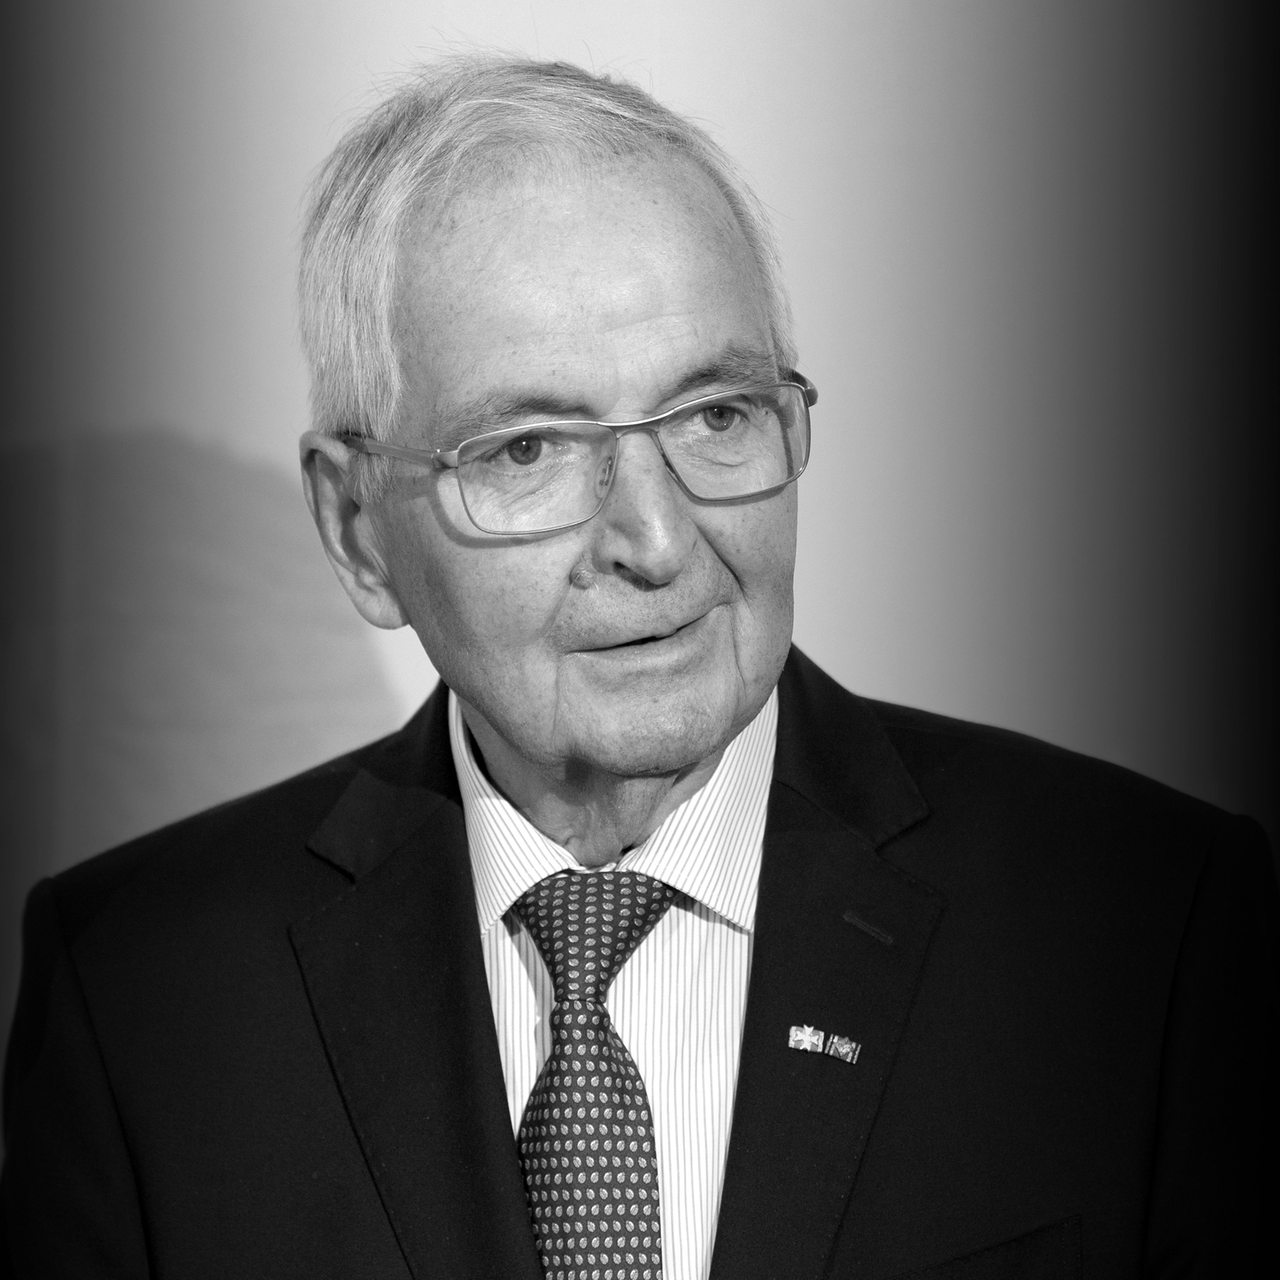 Der ehemalige Bundesumweltminister Klaus Töpfer (CDU)